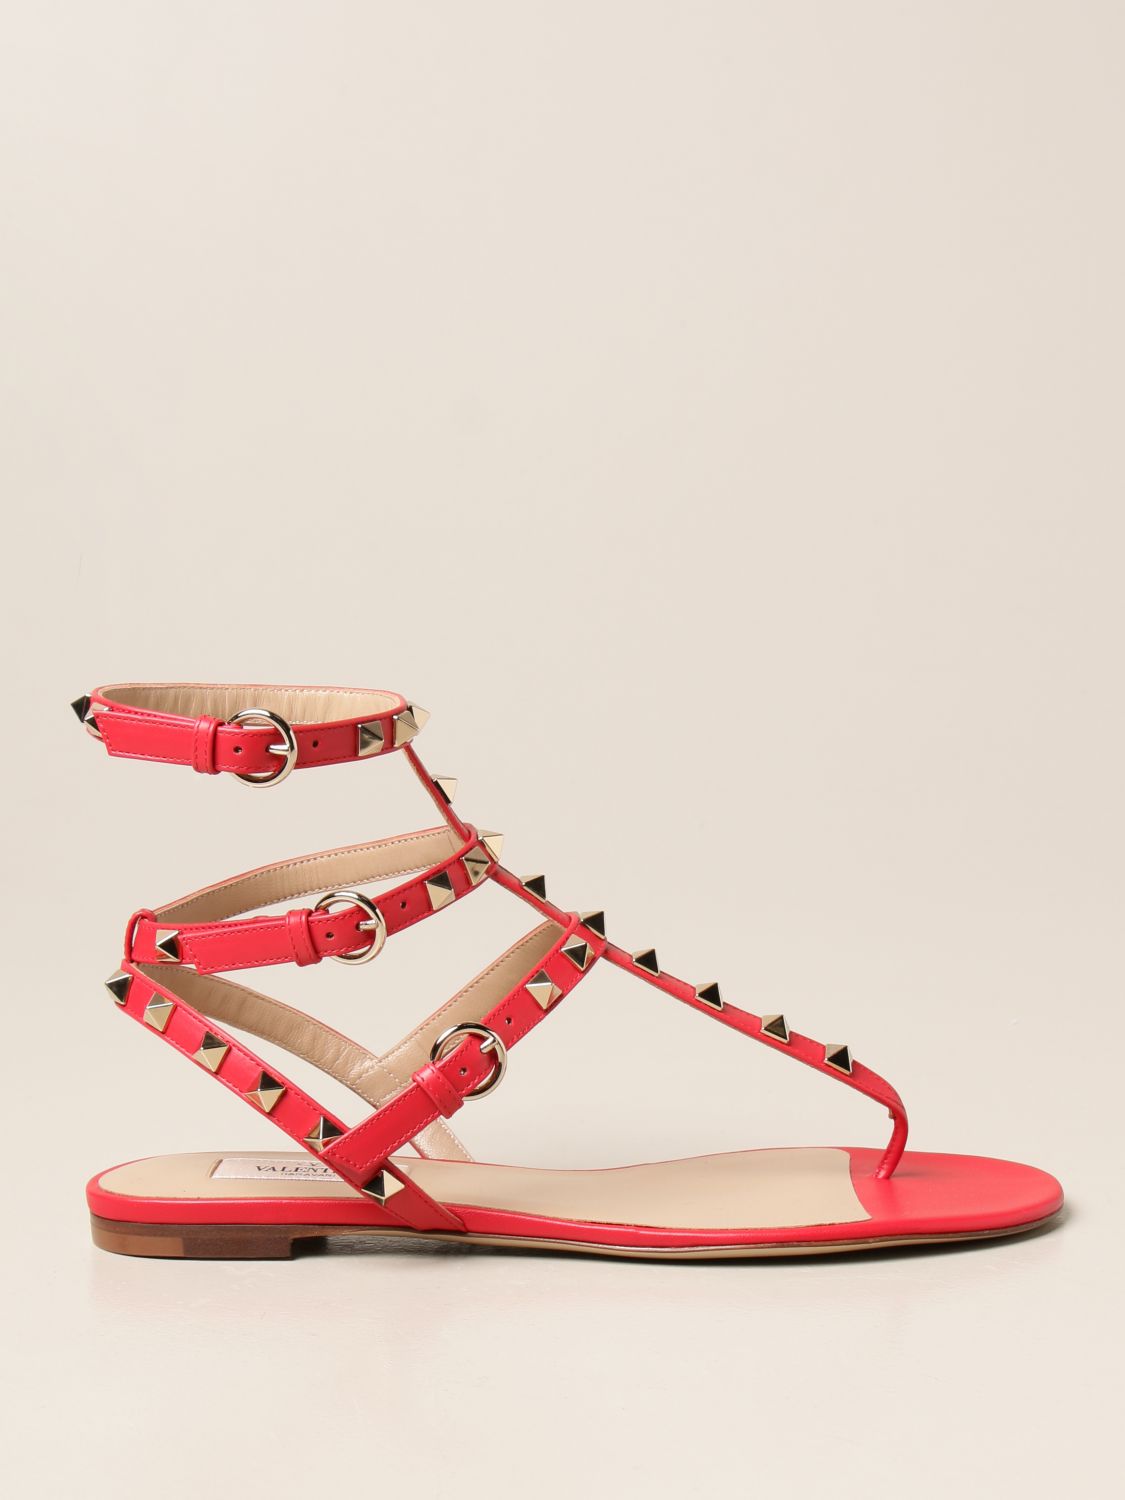 VALENTINO GARAVANI: flat sandal in leather - Red | Valentino Garavani flat sandals VW2S0812 VOD online at